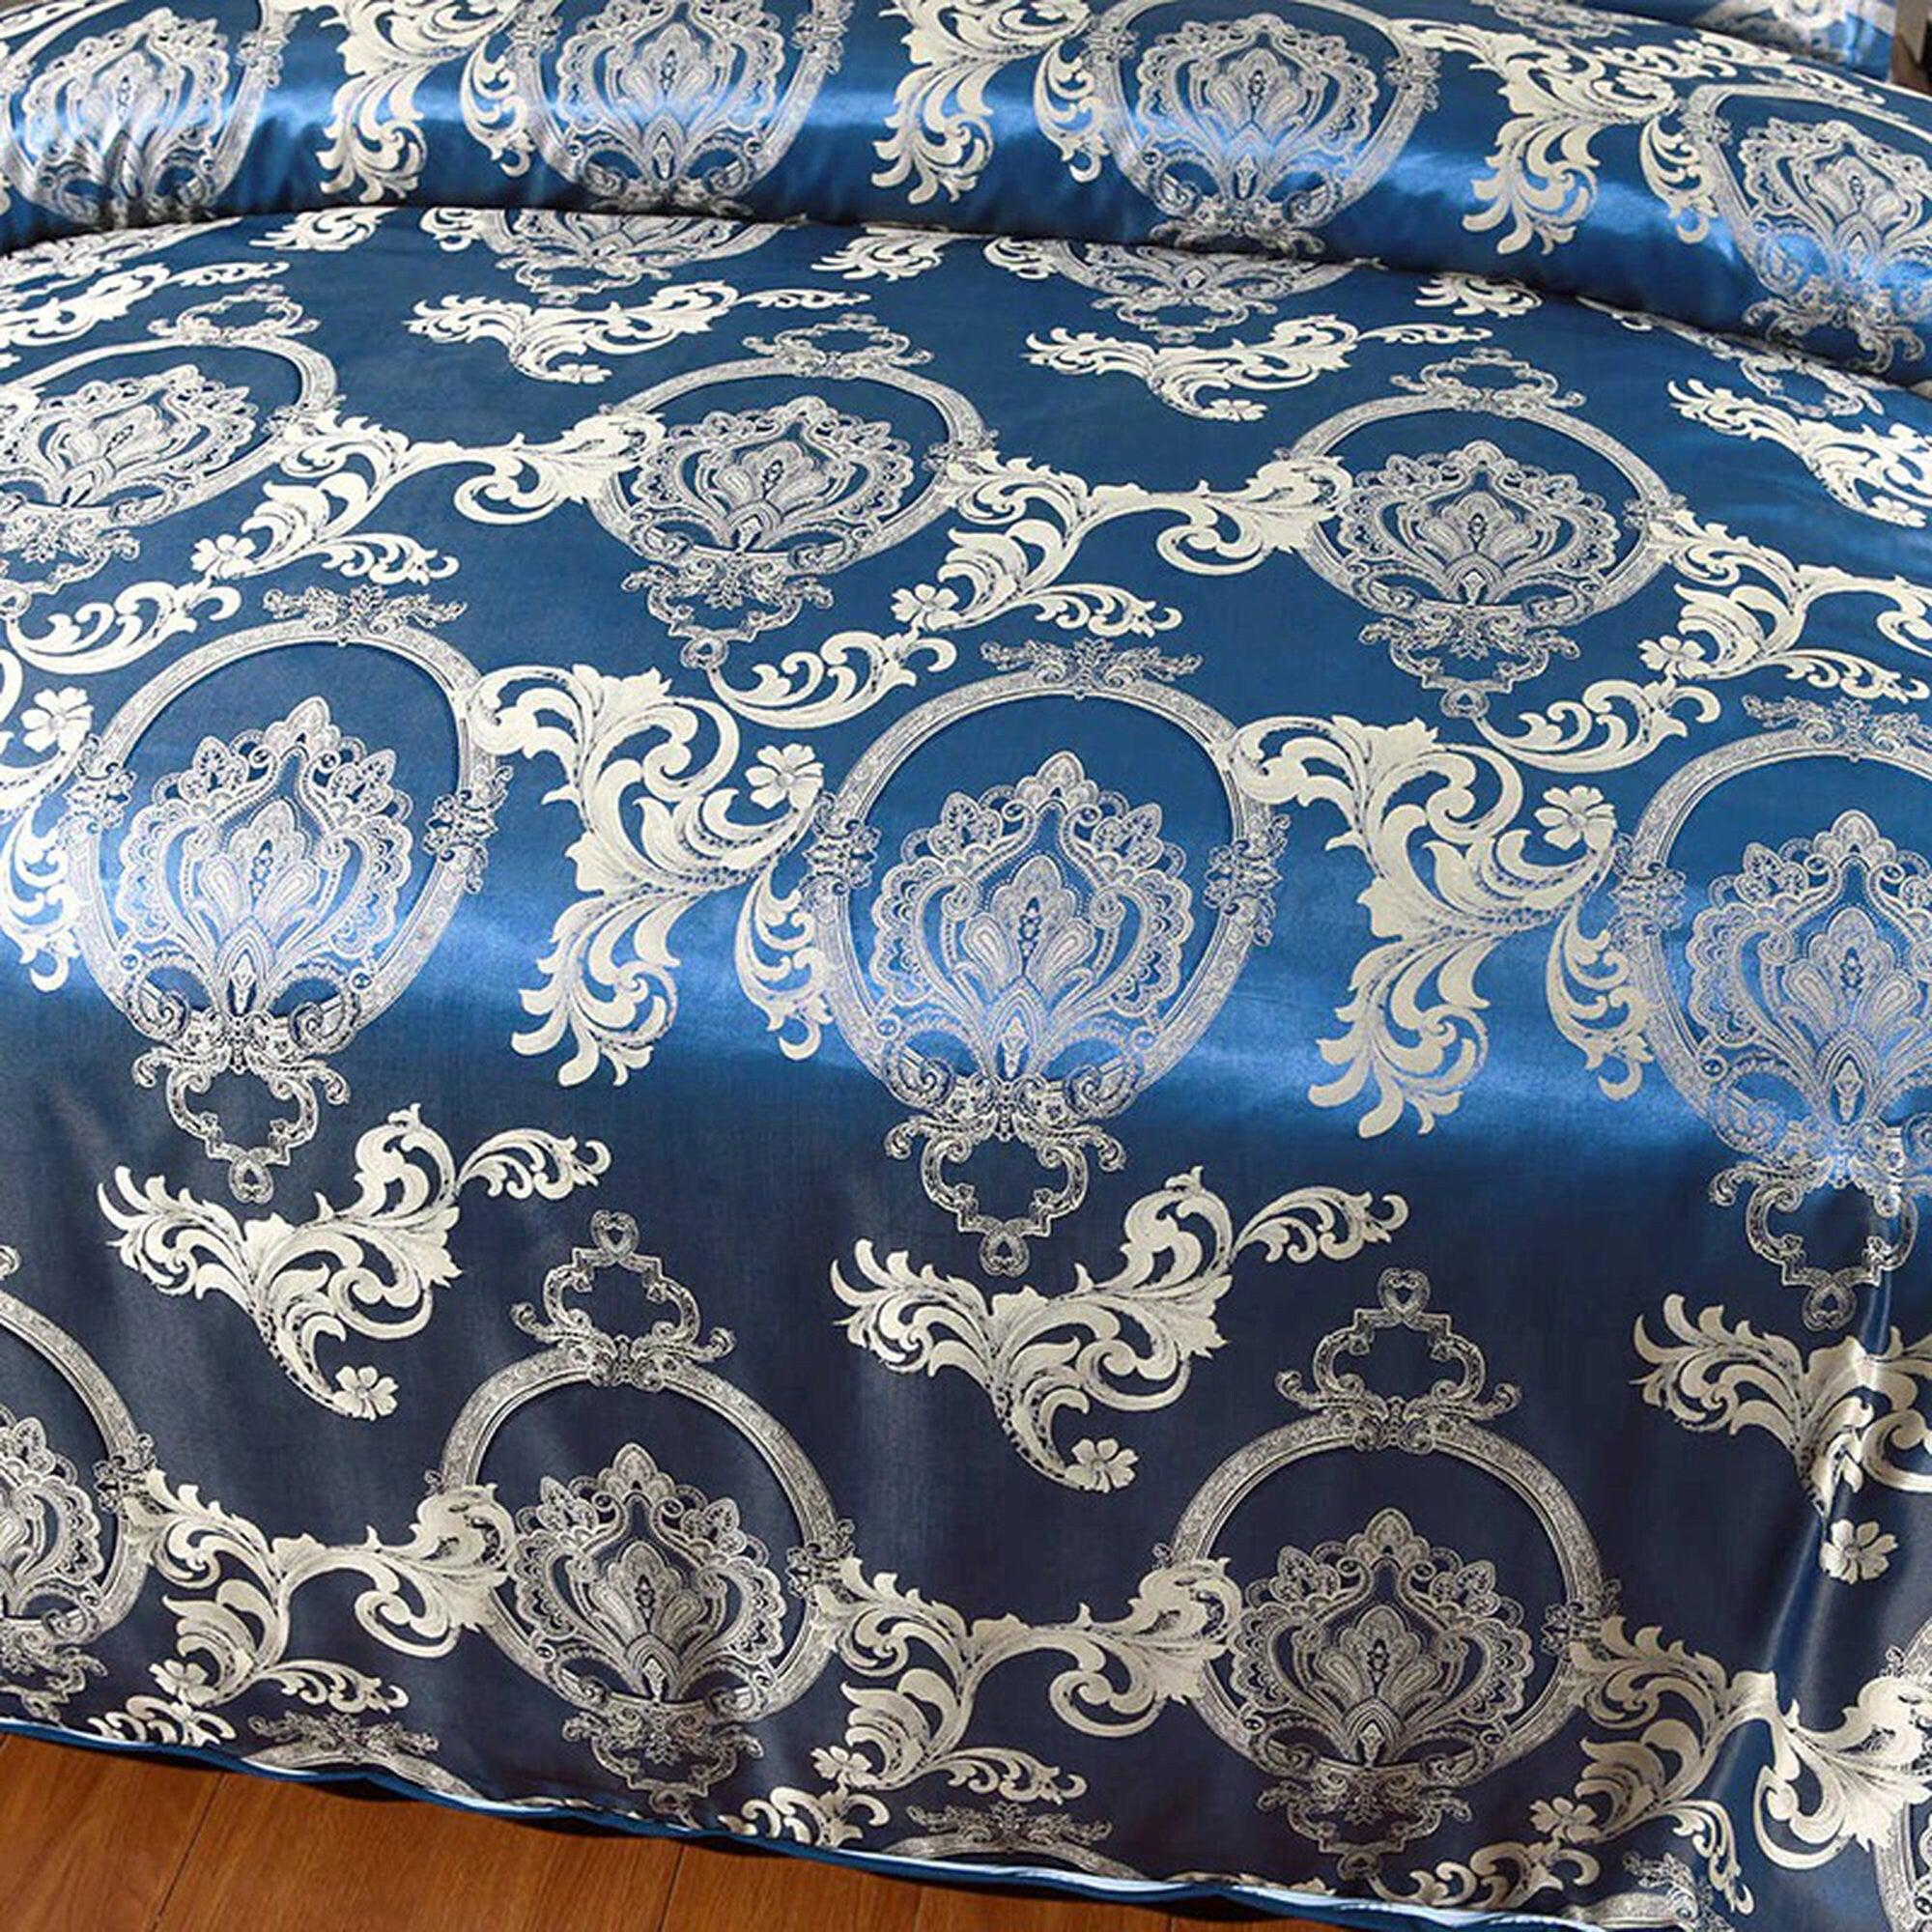 daintyduvet Royal Blue Luxury Bedding made with Silky Jacquard Fabric, Victorian Duvet Cover Set, Designer Bedding, Aesthetic Duvet King Queen Full Twin